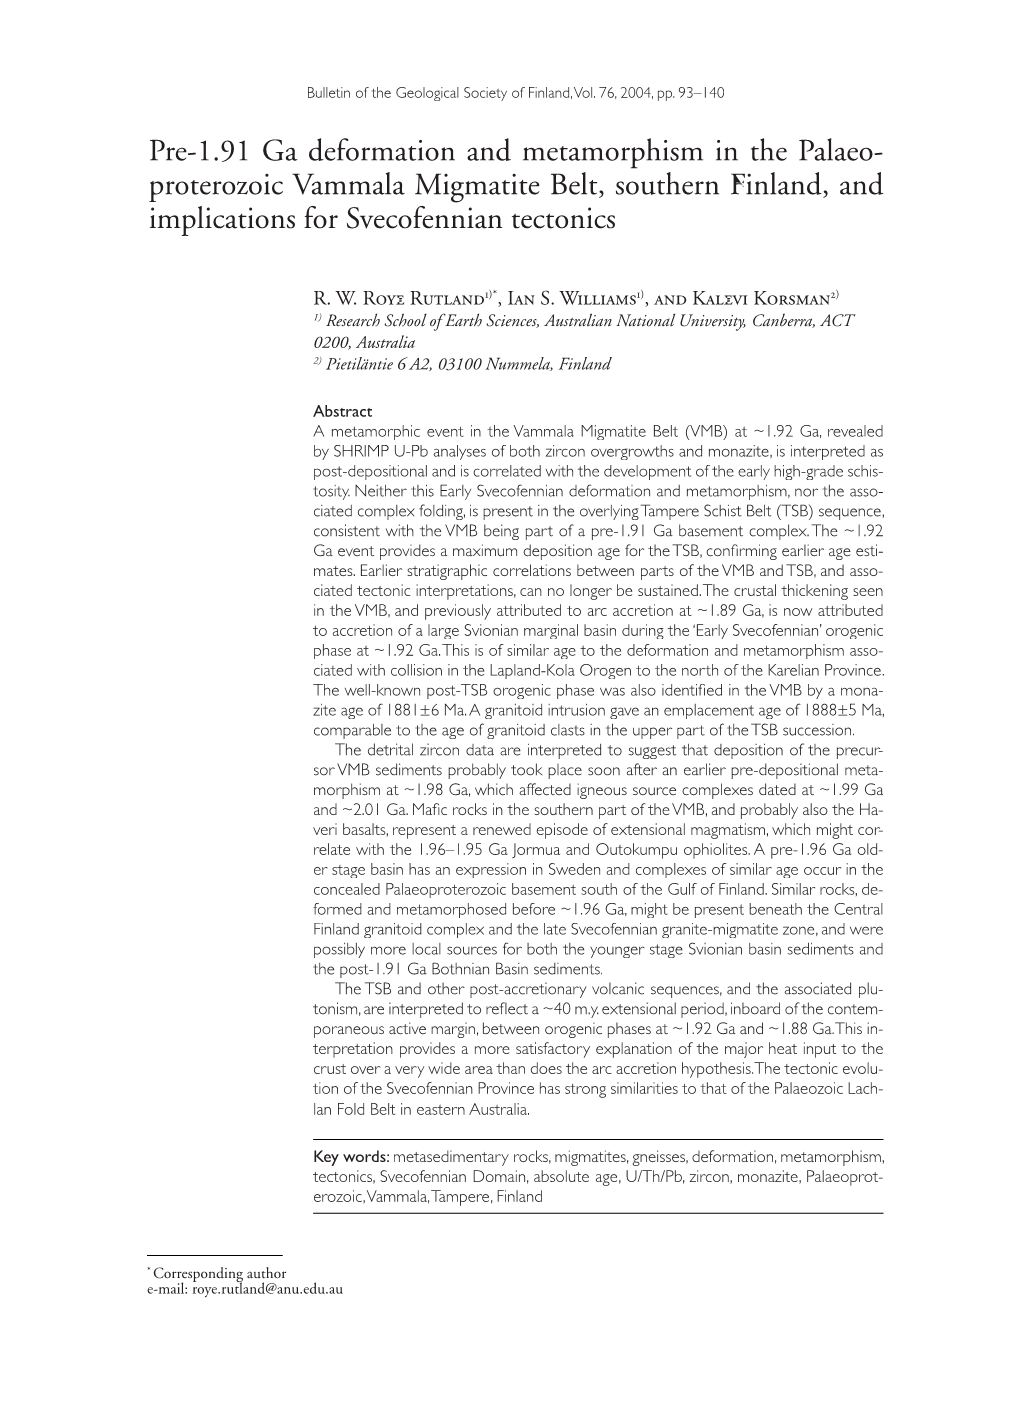 Proterozoic Vammala Migmatite Belt, Southern Finland, and Implications for Svecofennian Tectonics